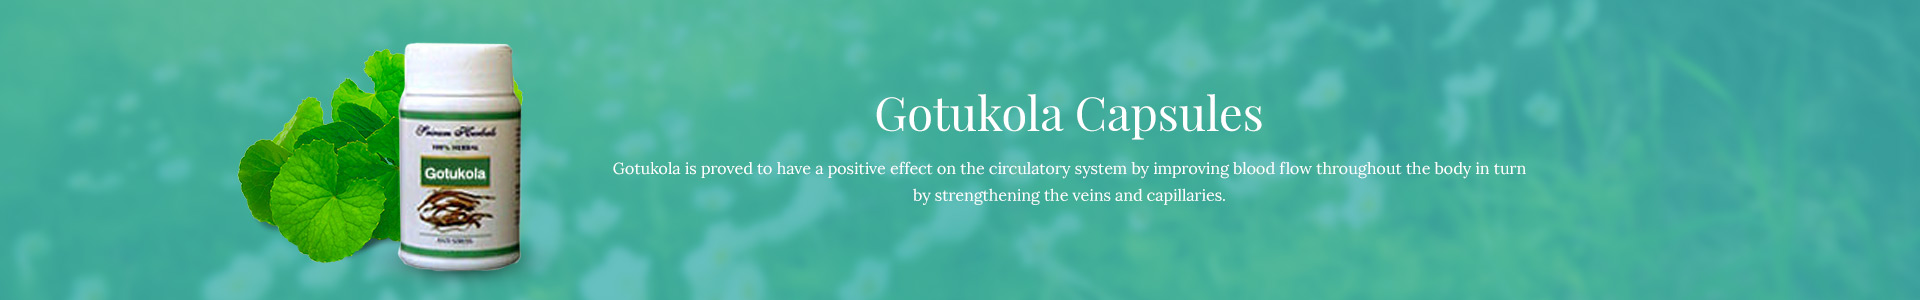 gotukola-capsules